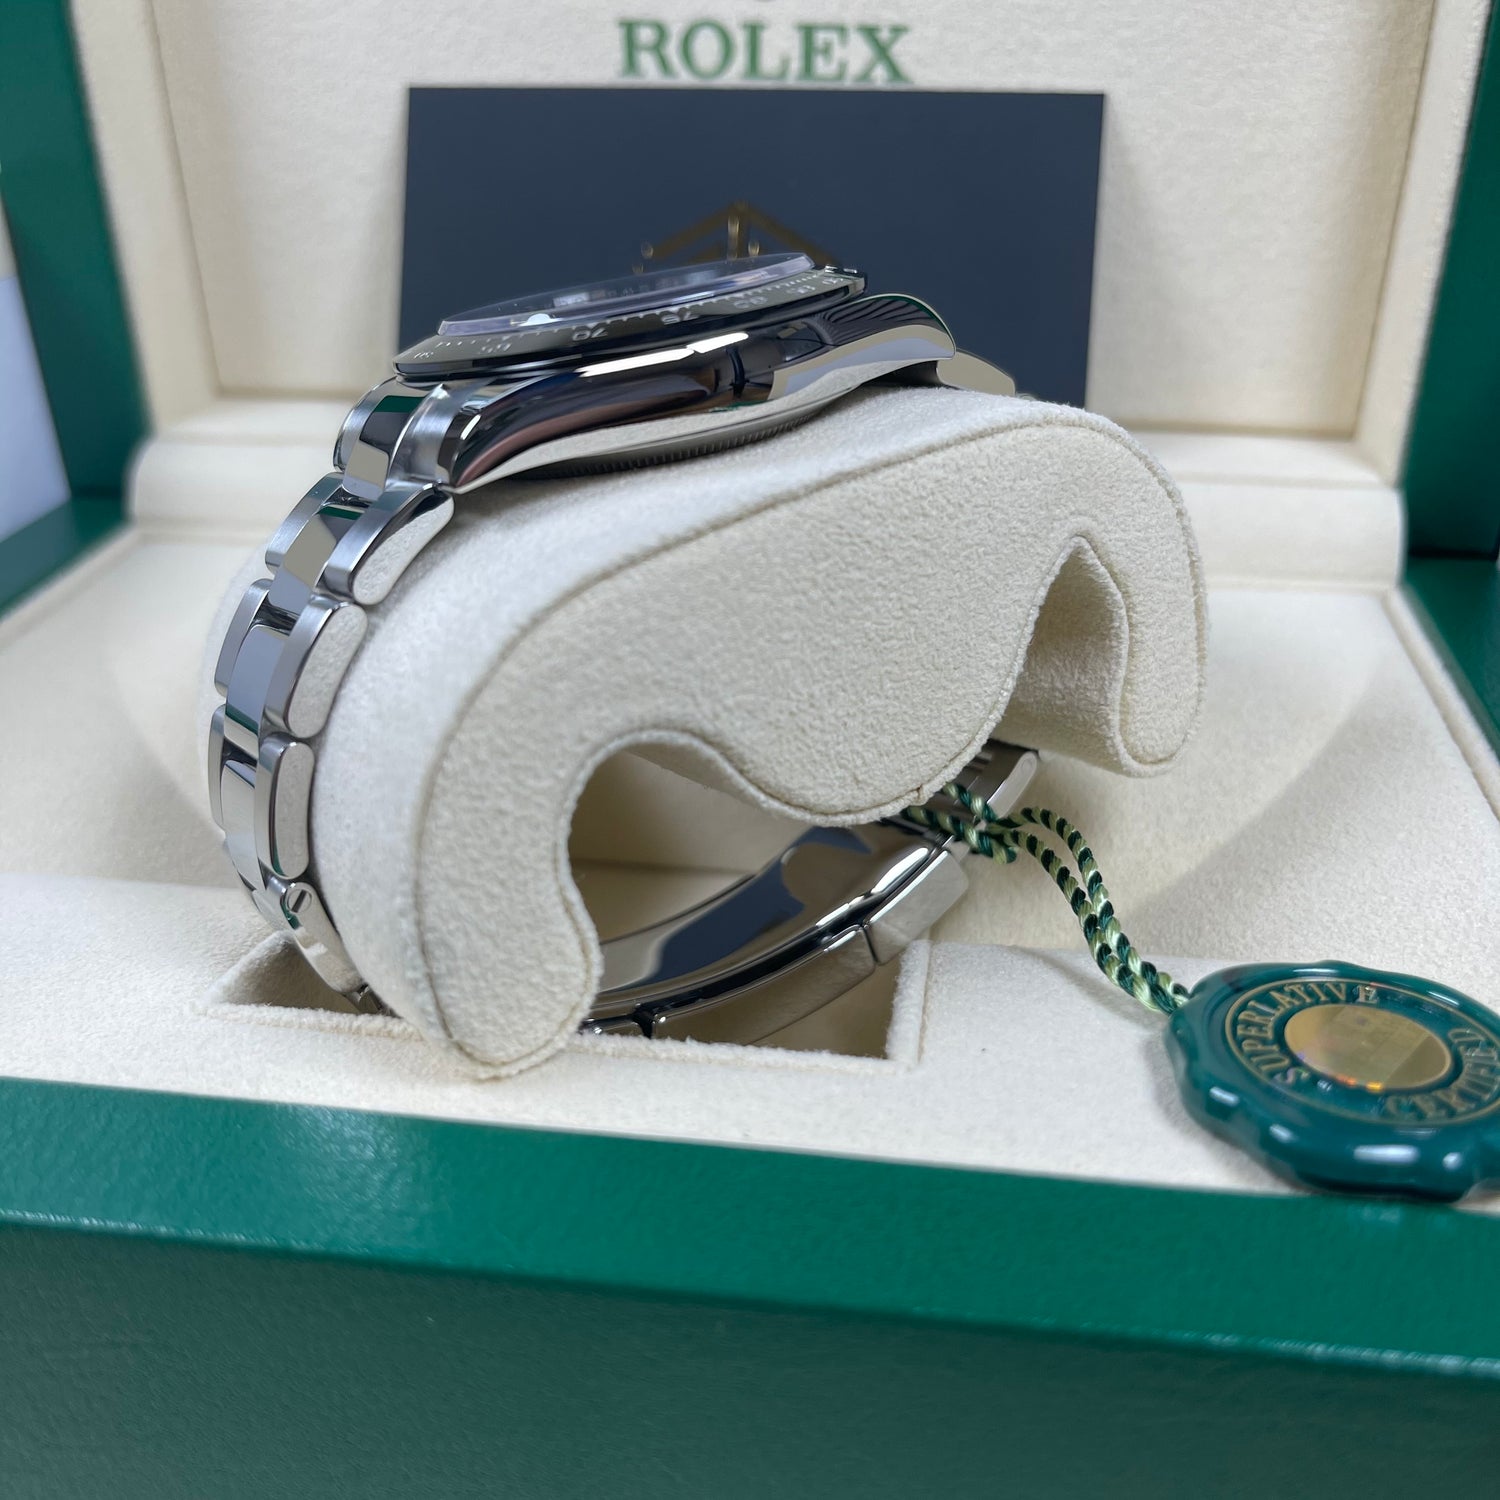 Rolex Cosmograph Daytona Ceramic White 'Panda' Dial 116500LN 2019 Watch